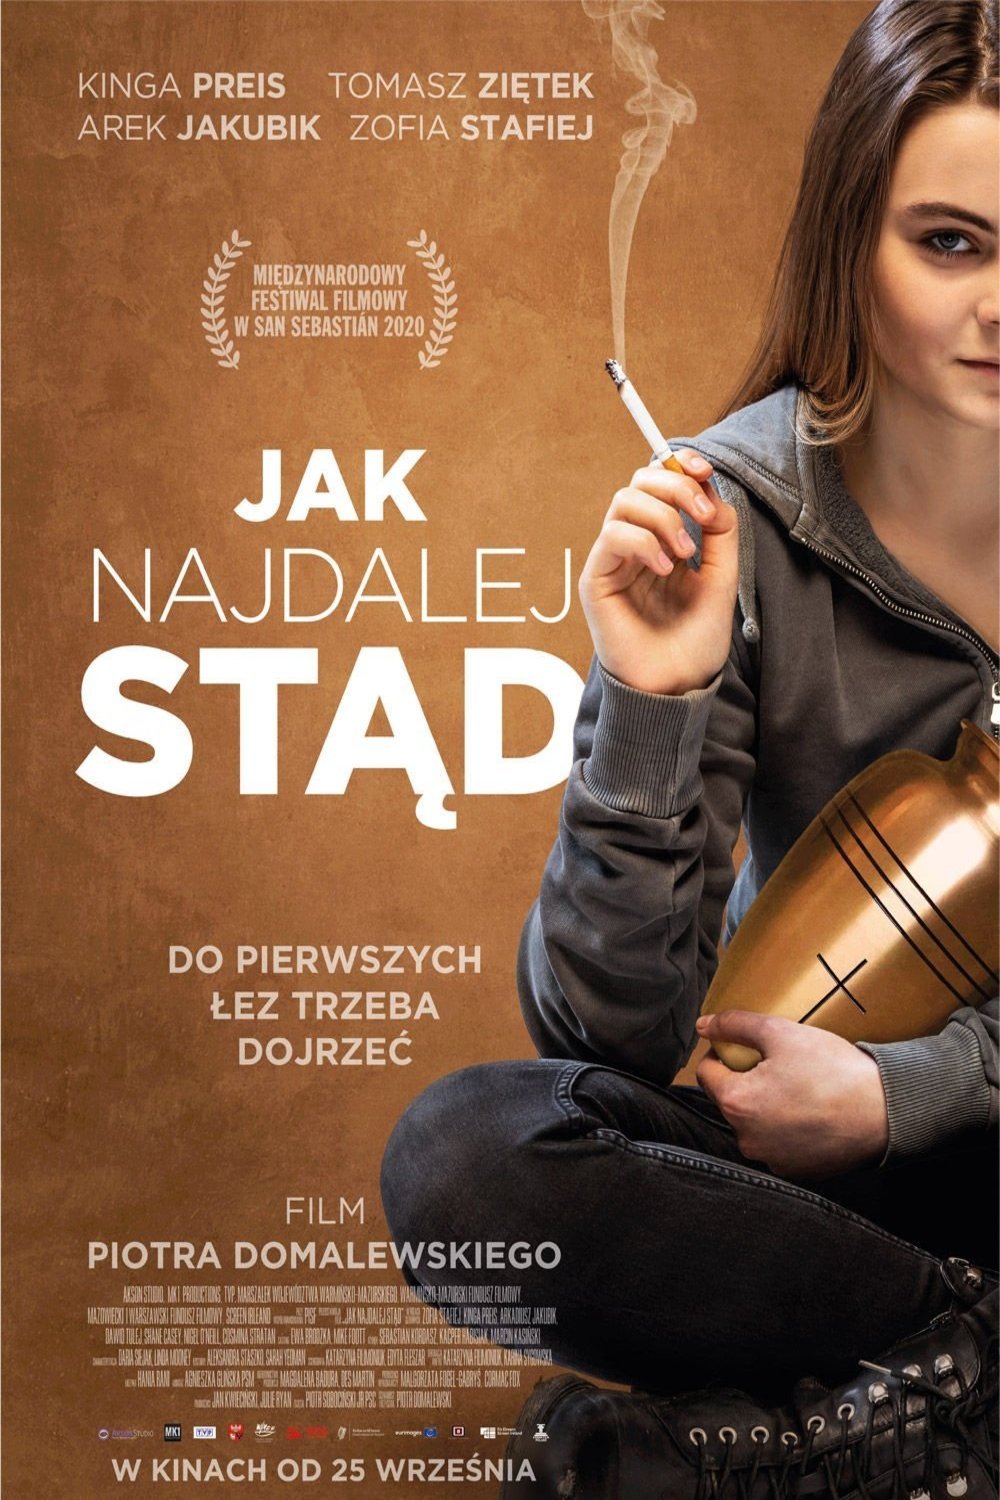 Poster of the movie Jak najdalej stad